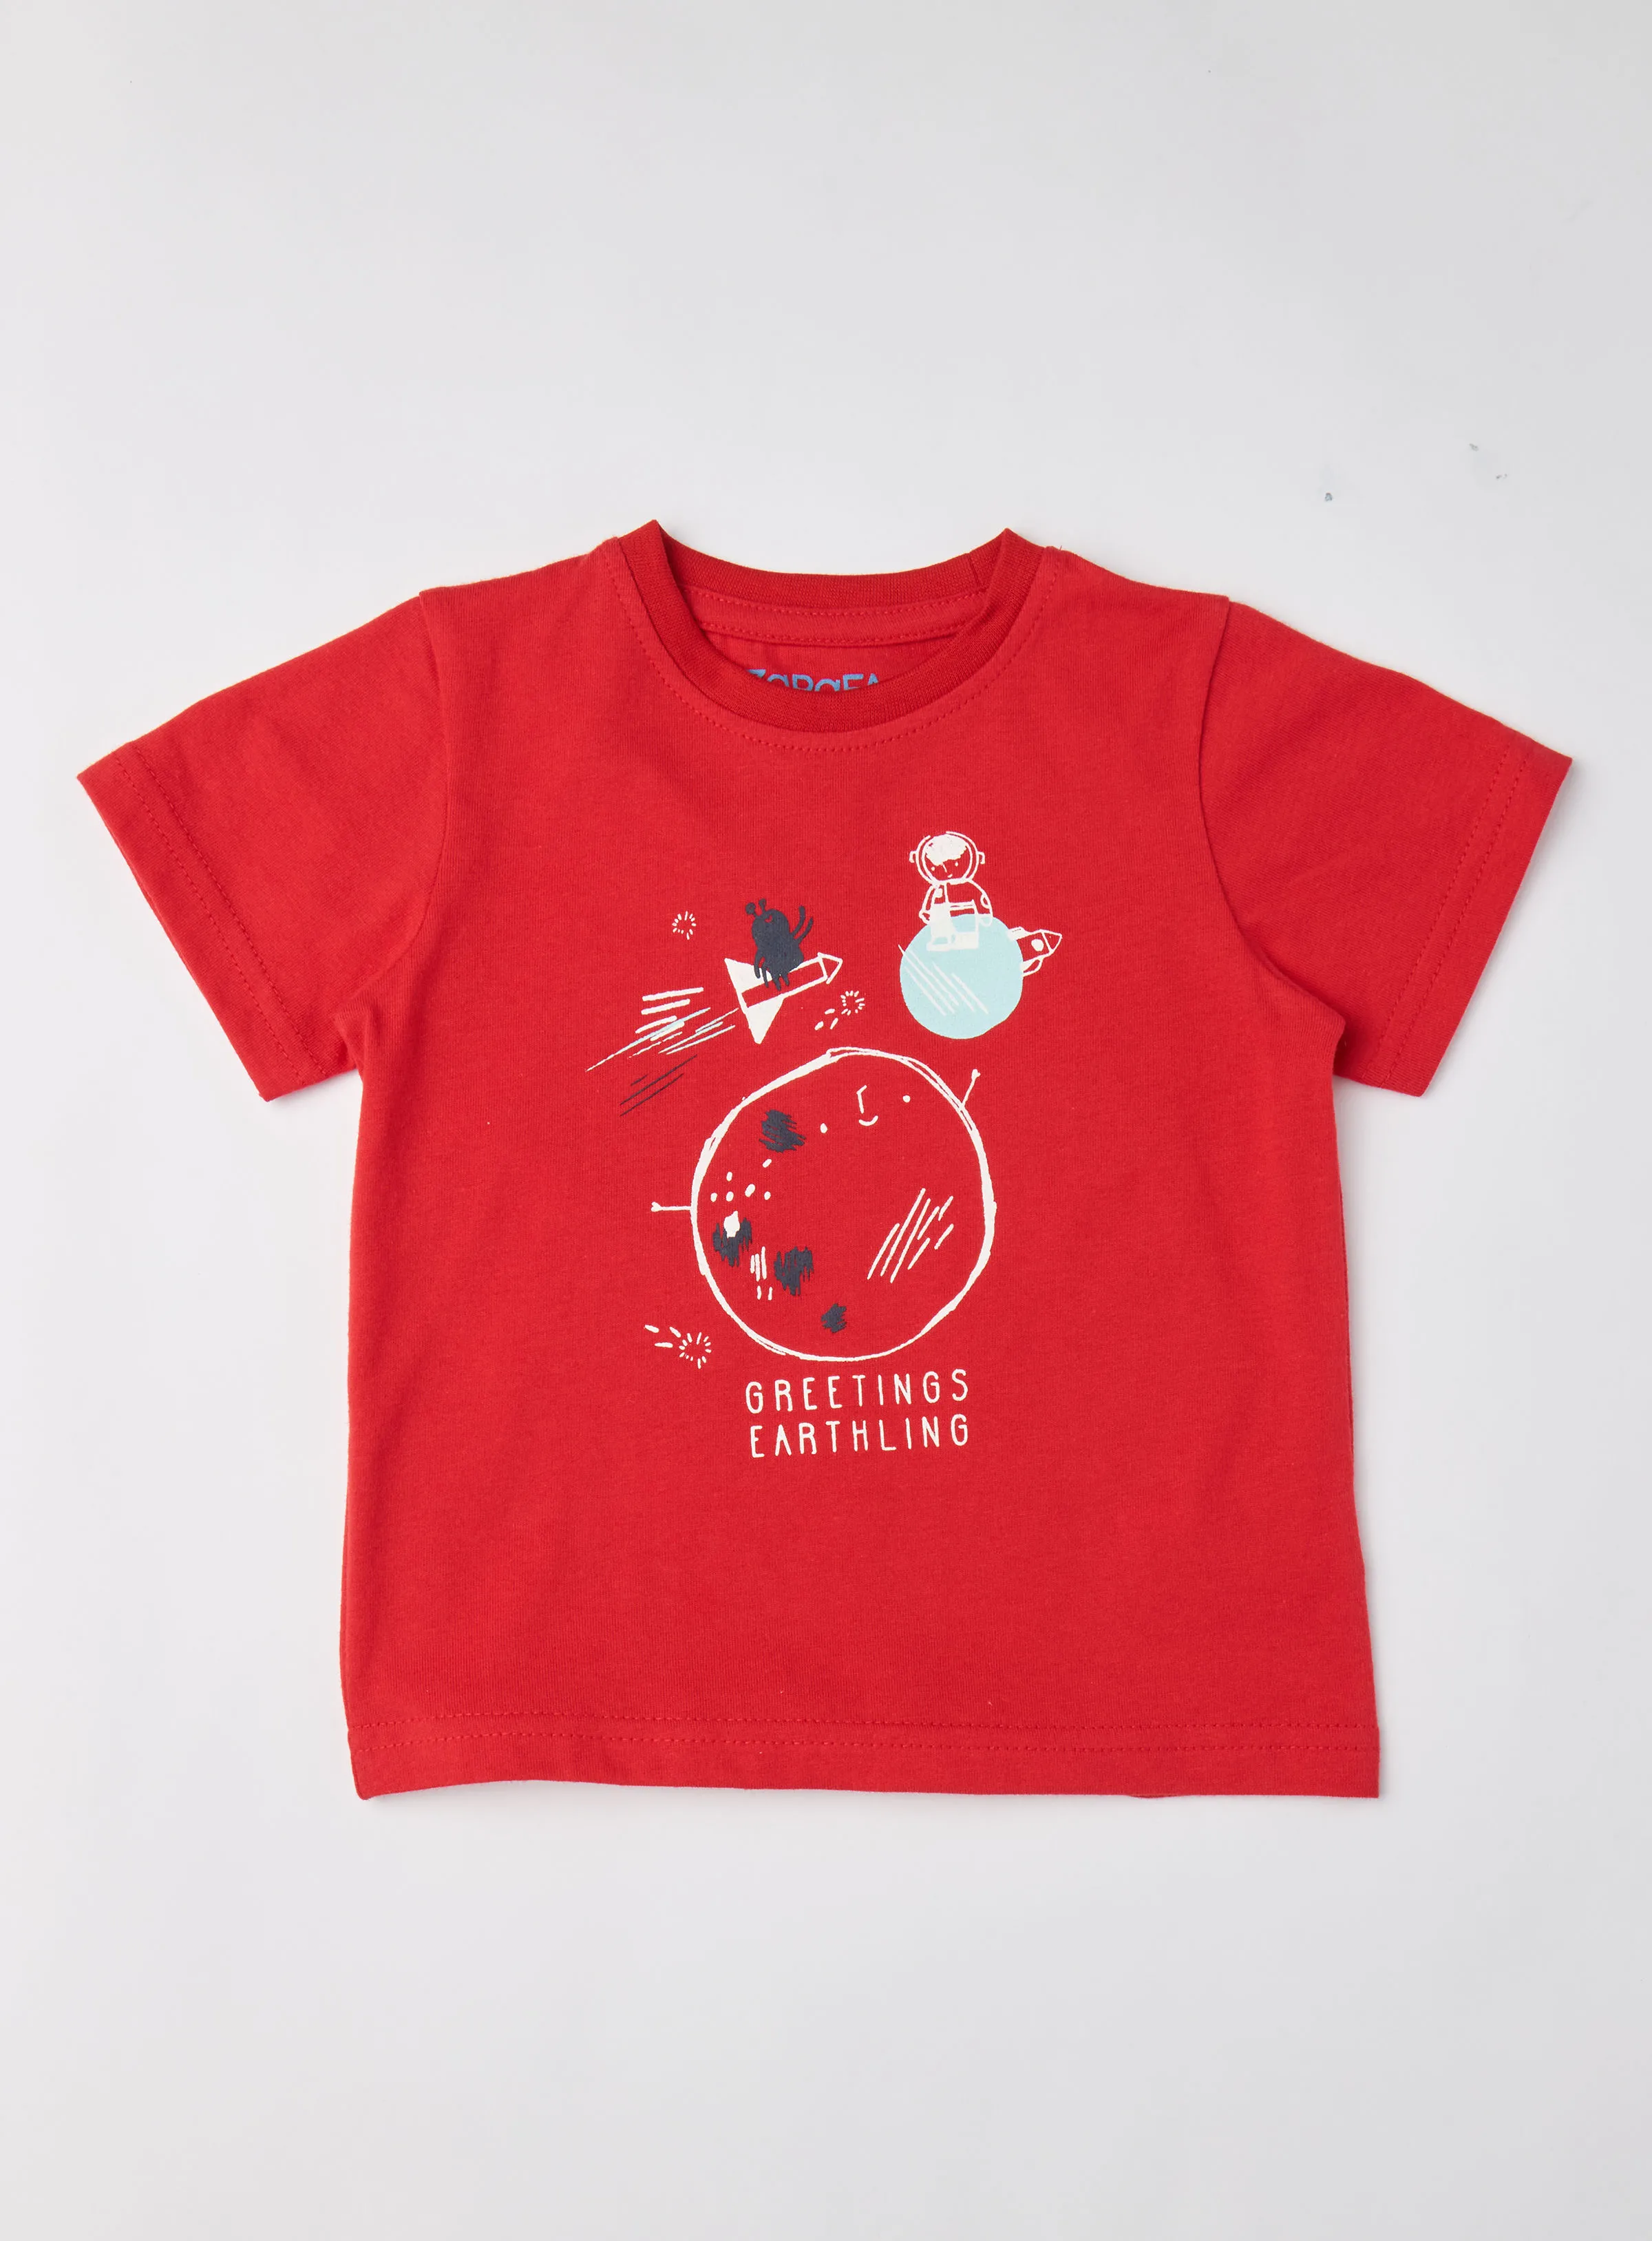 Zarafa Baby تي شيرت للأولاد برقبة دائرية وأكمام قصيرة أحمر